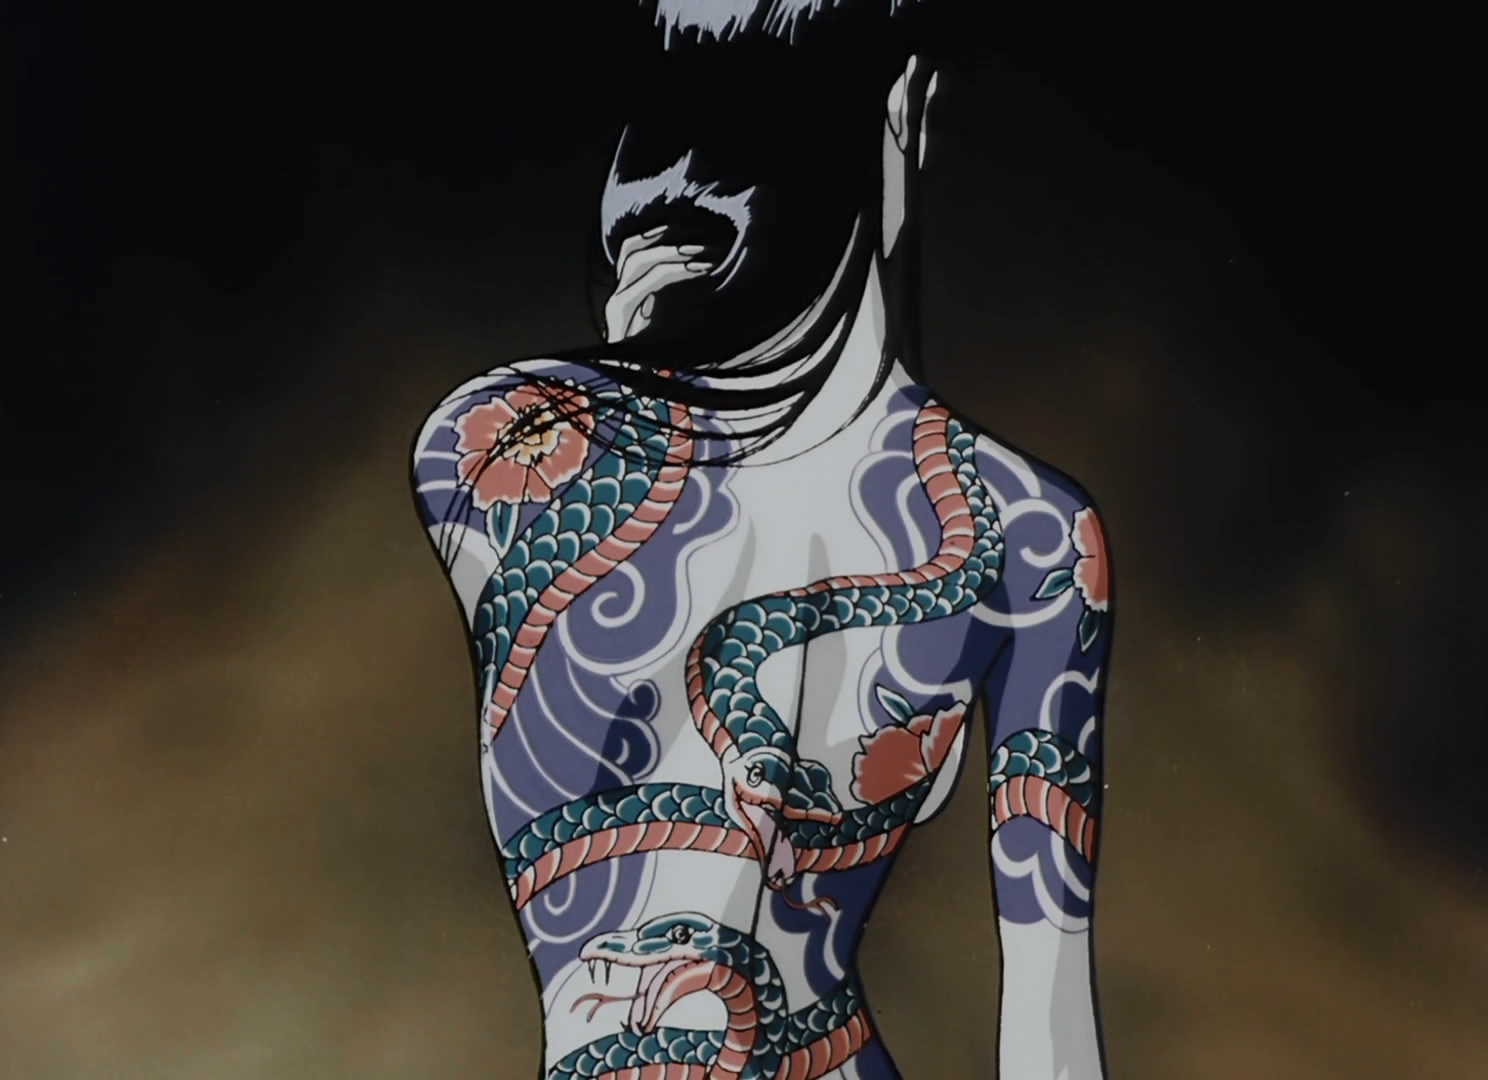 https://nefariousreviews.files.wordpress.com/2014/11/ninja-scroll-the-movie-tattooed-woman.jpg